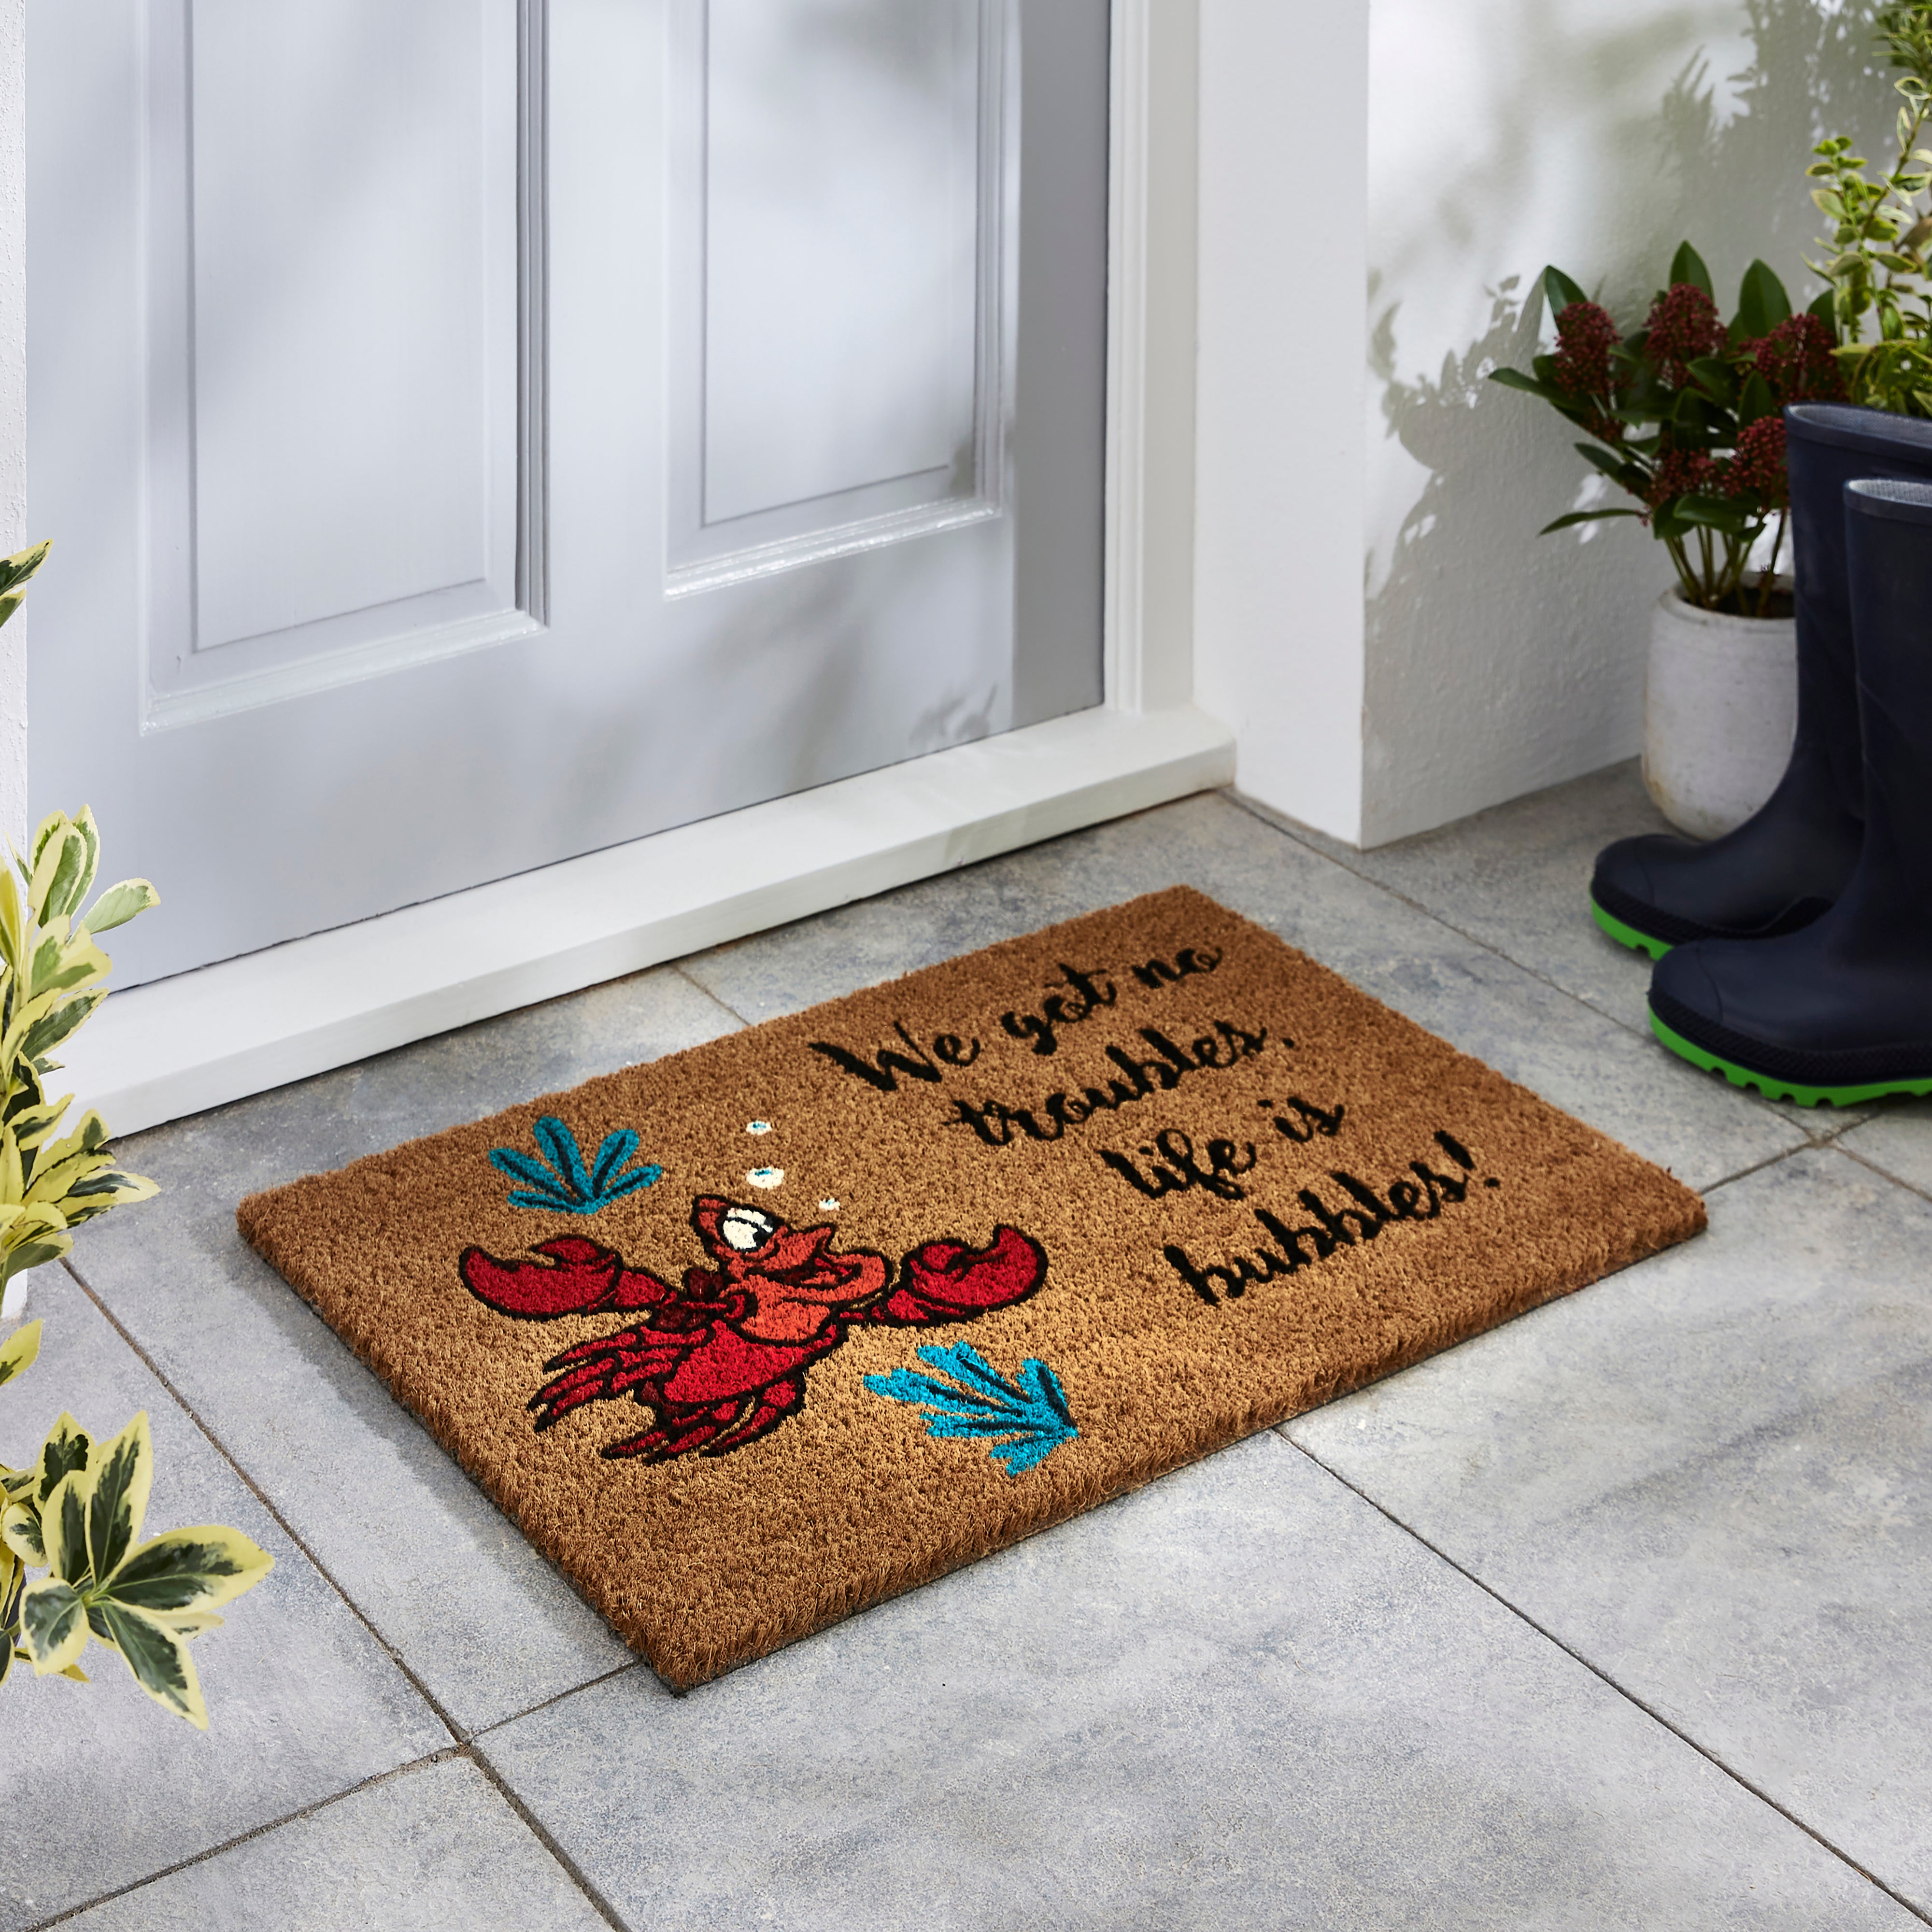 The Little Mermaid Sebastian Coir Doormat